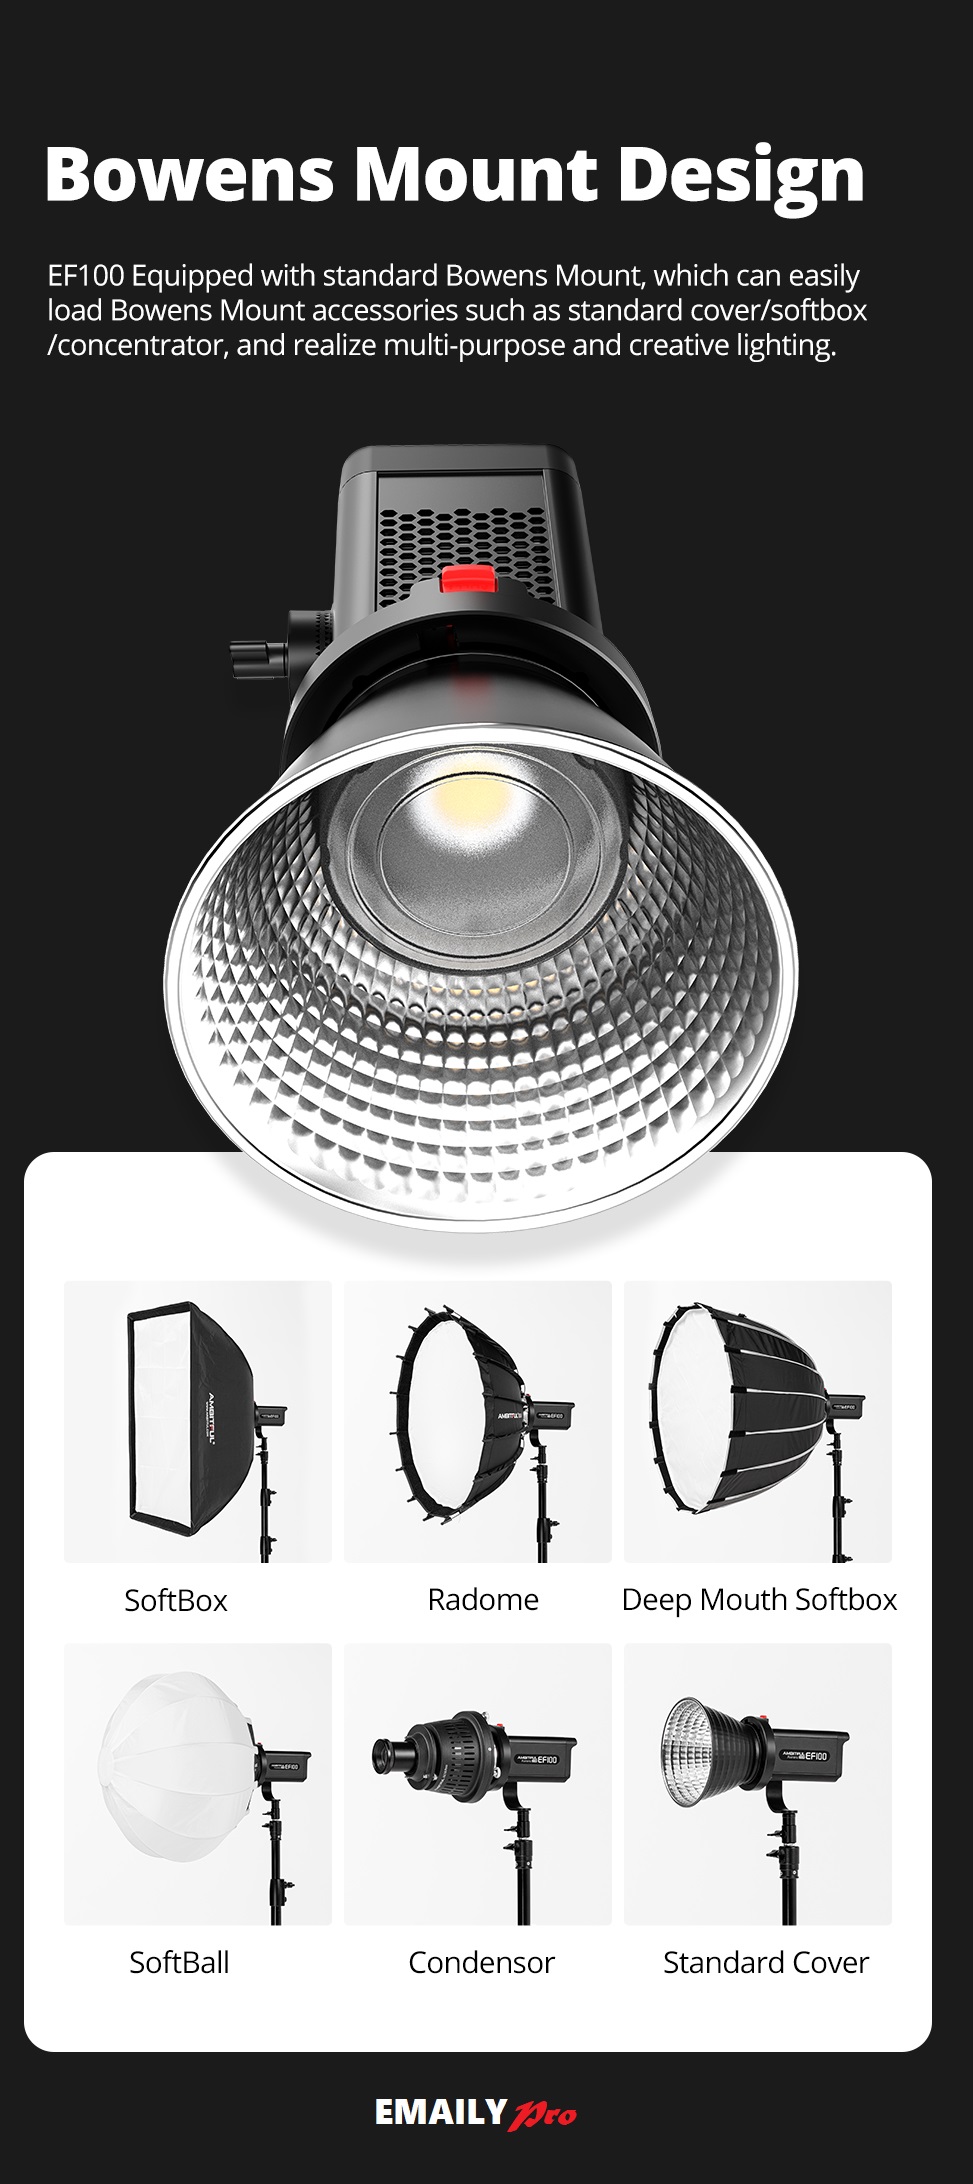 AMBITFUL LED EF-100 VIDEO LIGHT 100W